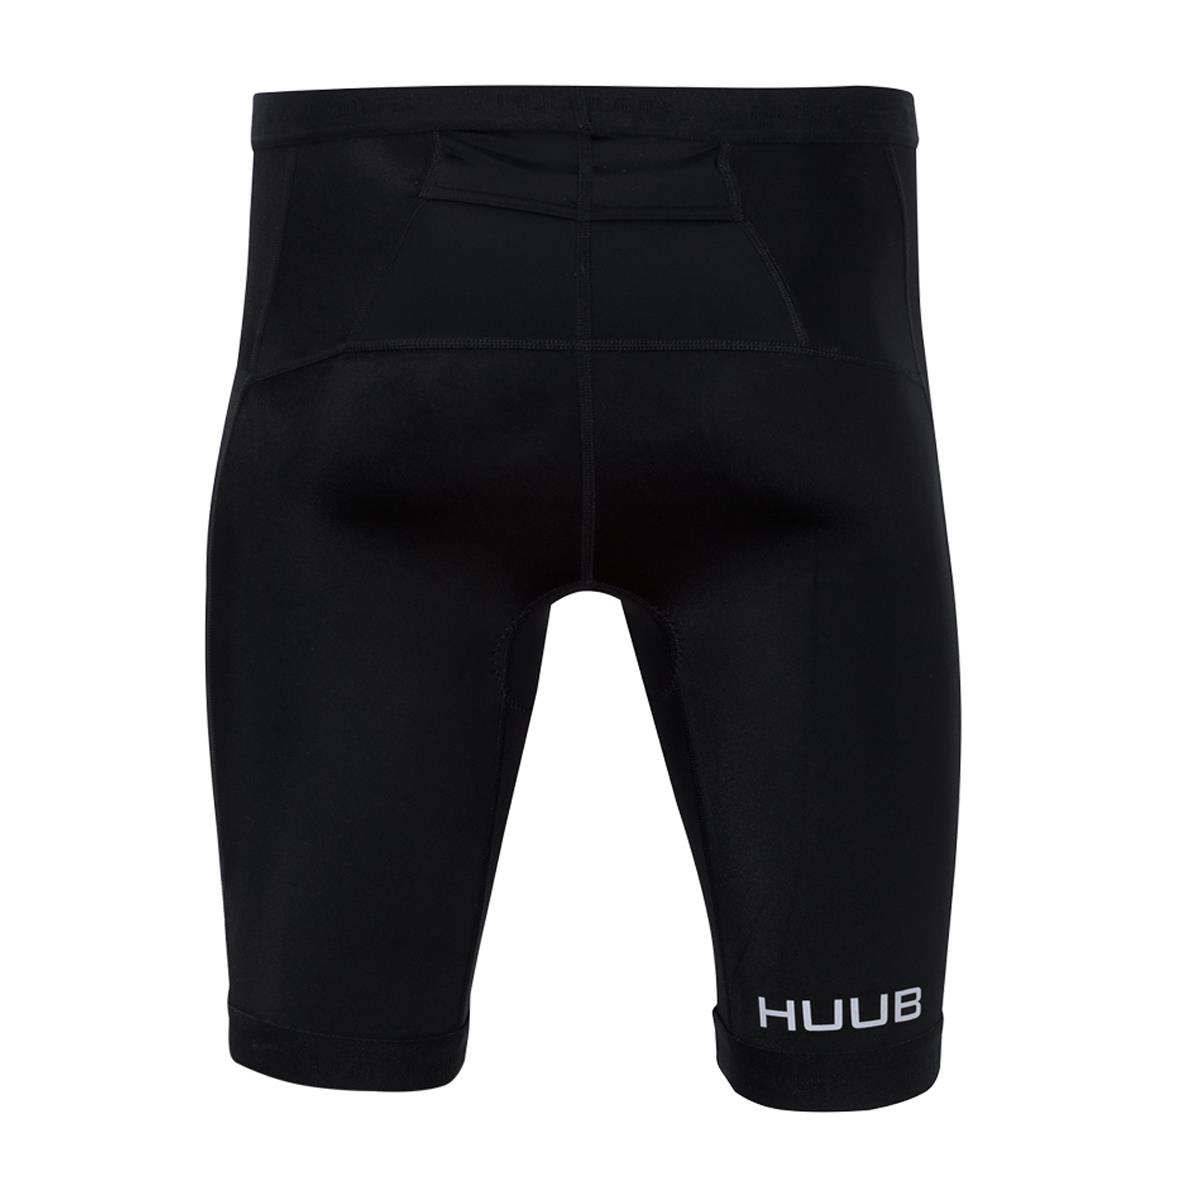 HUUB Men's Commit Tri Short - Black